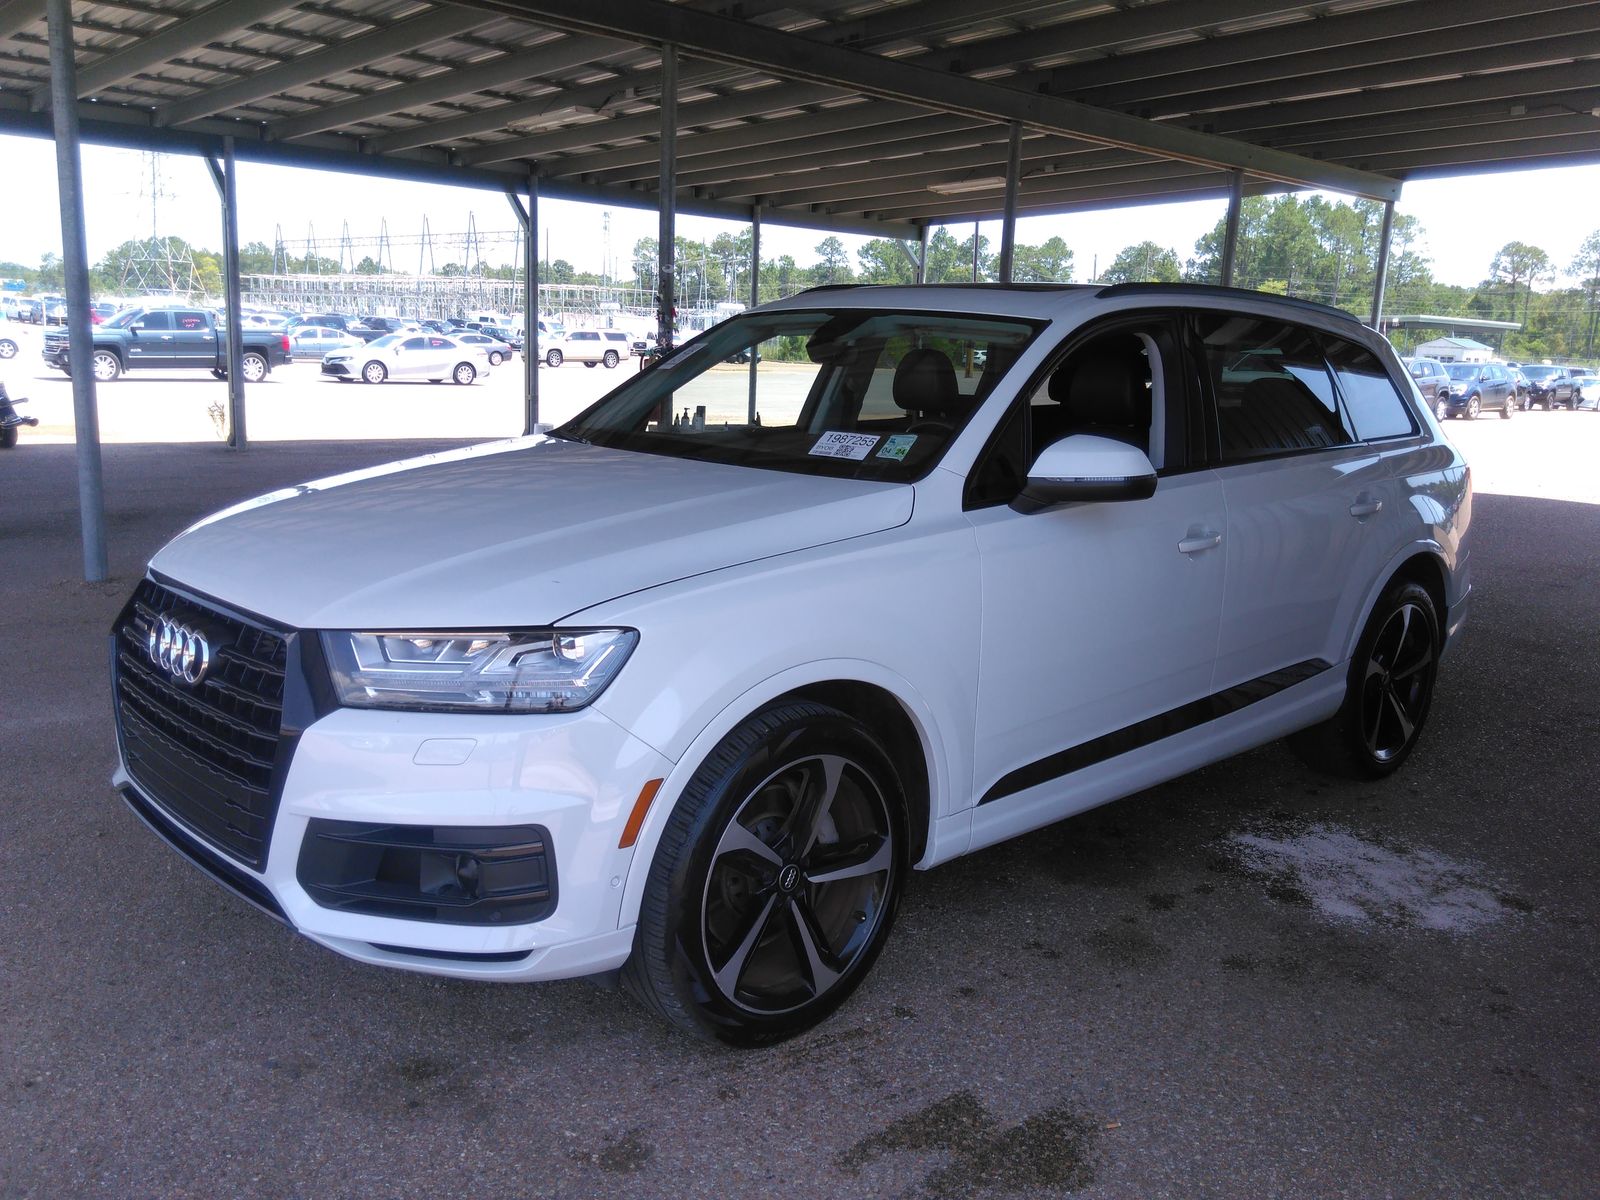 2019 Audi Q7 for Sale near Long Island, NY - Legend Auto Group